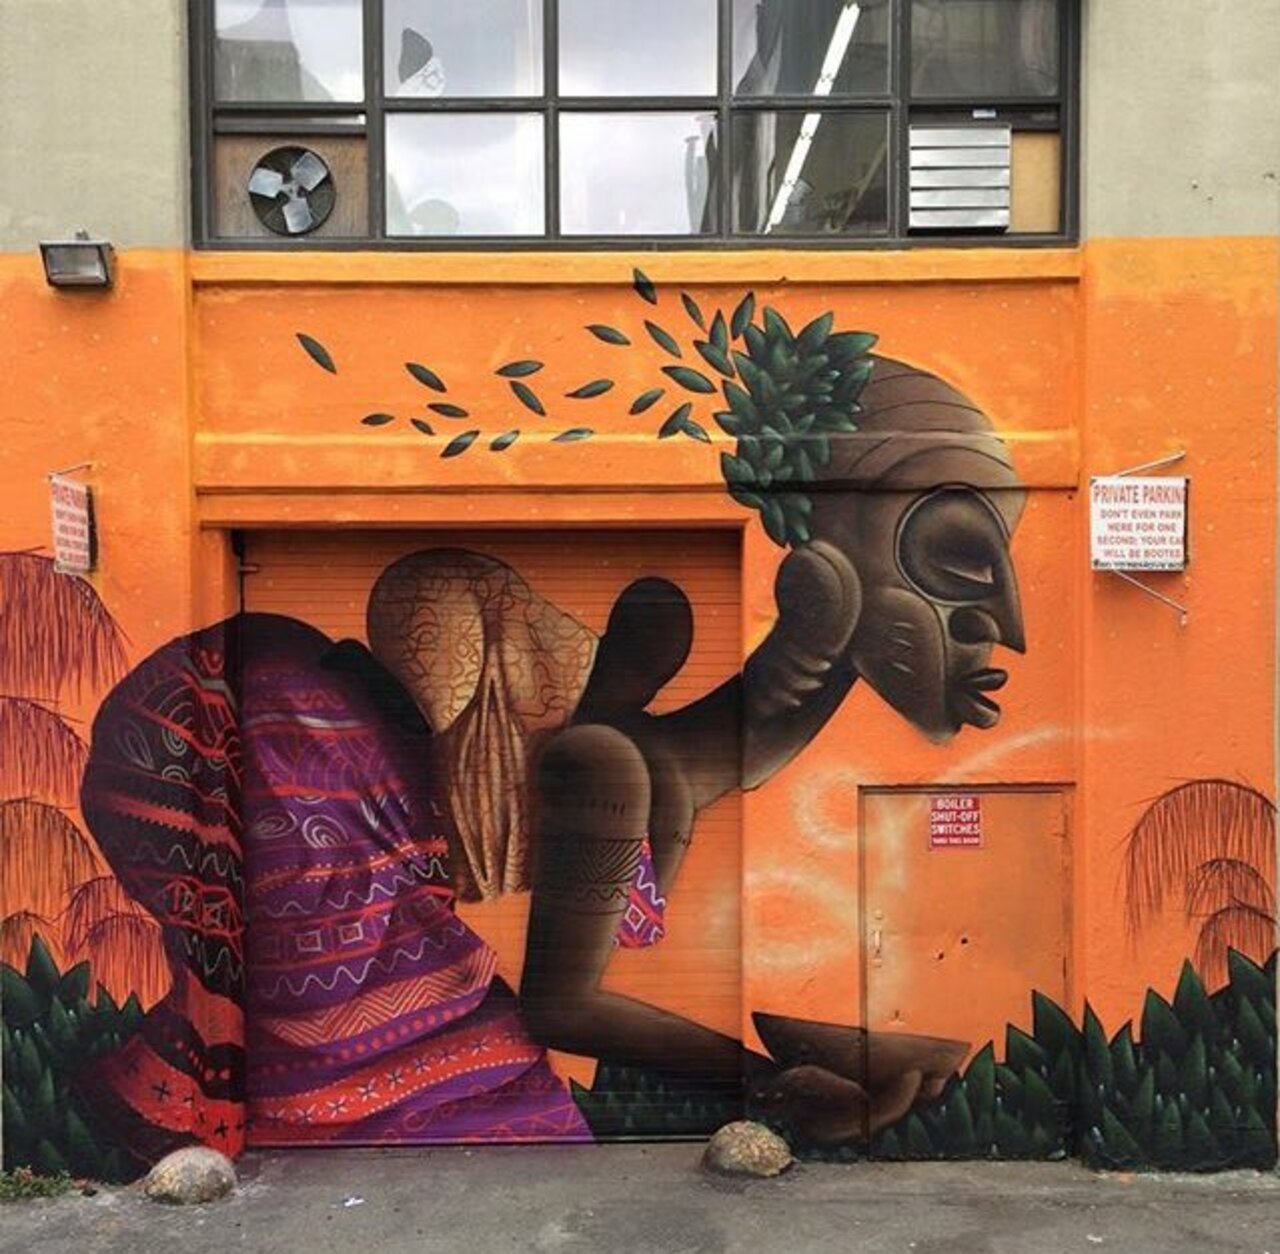 New Street Art by Alexandre Keto in NYC 

#art #graffiti #mural #streetart https://t.co/YoZUb3DVyb